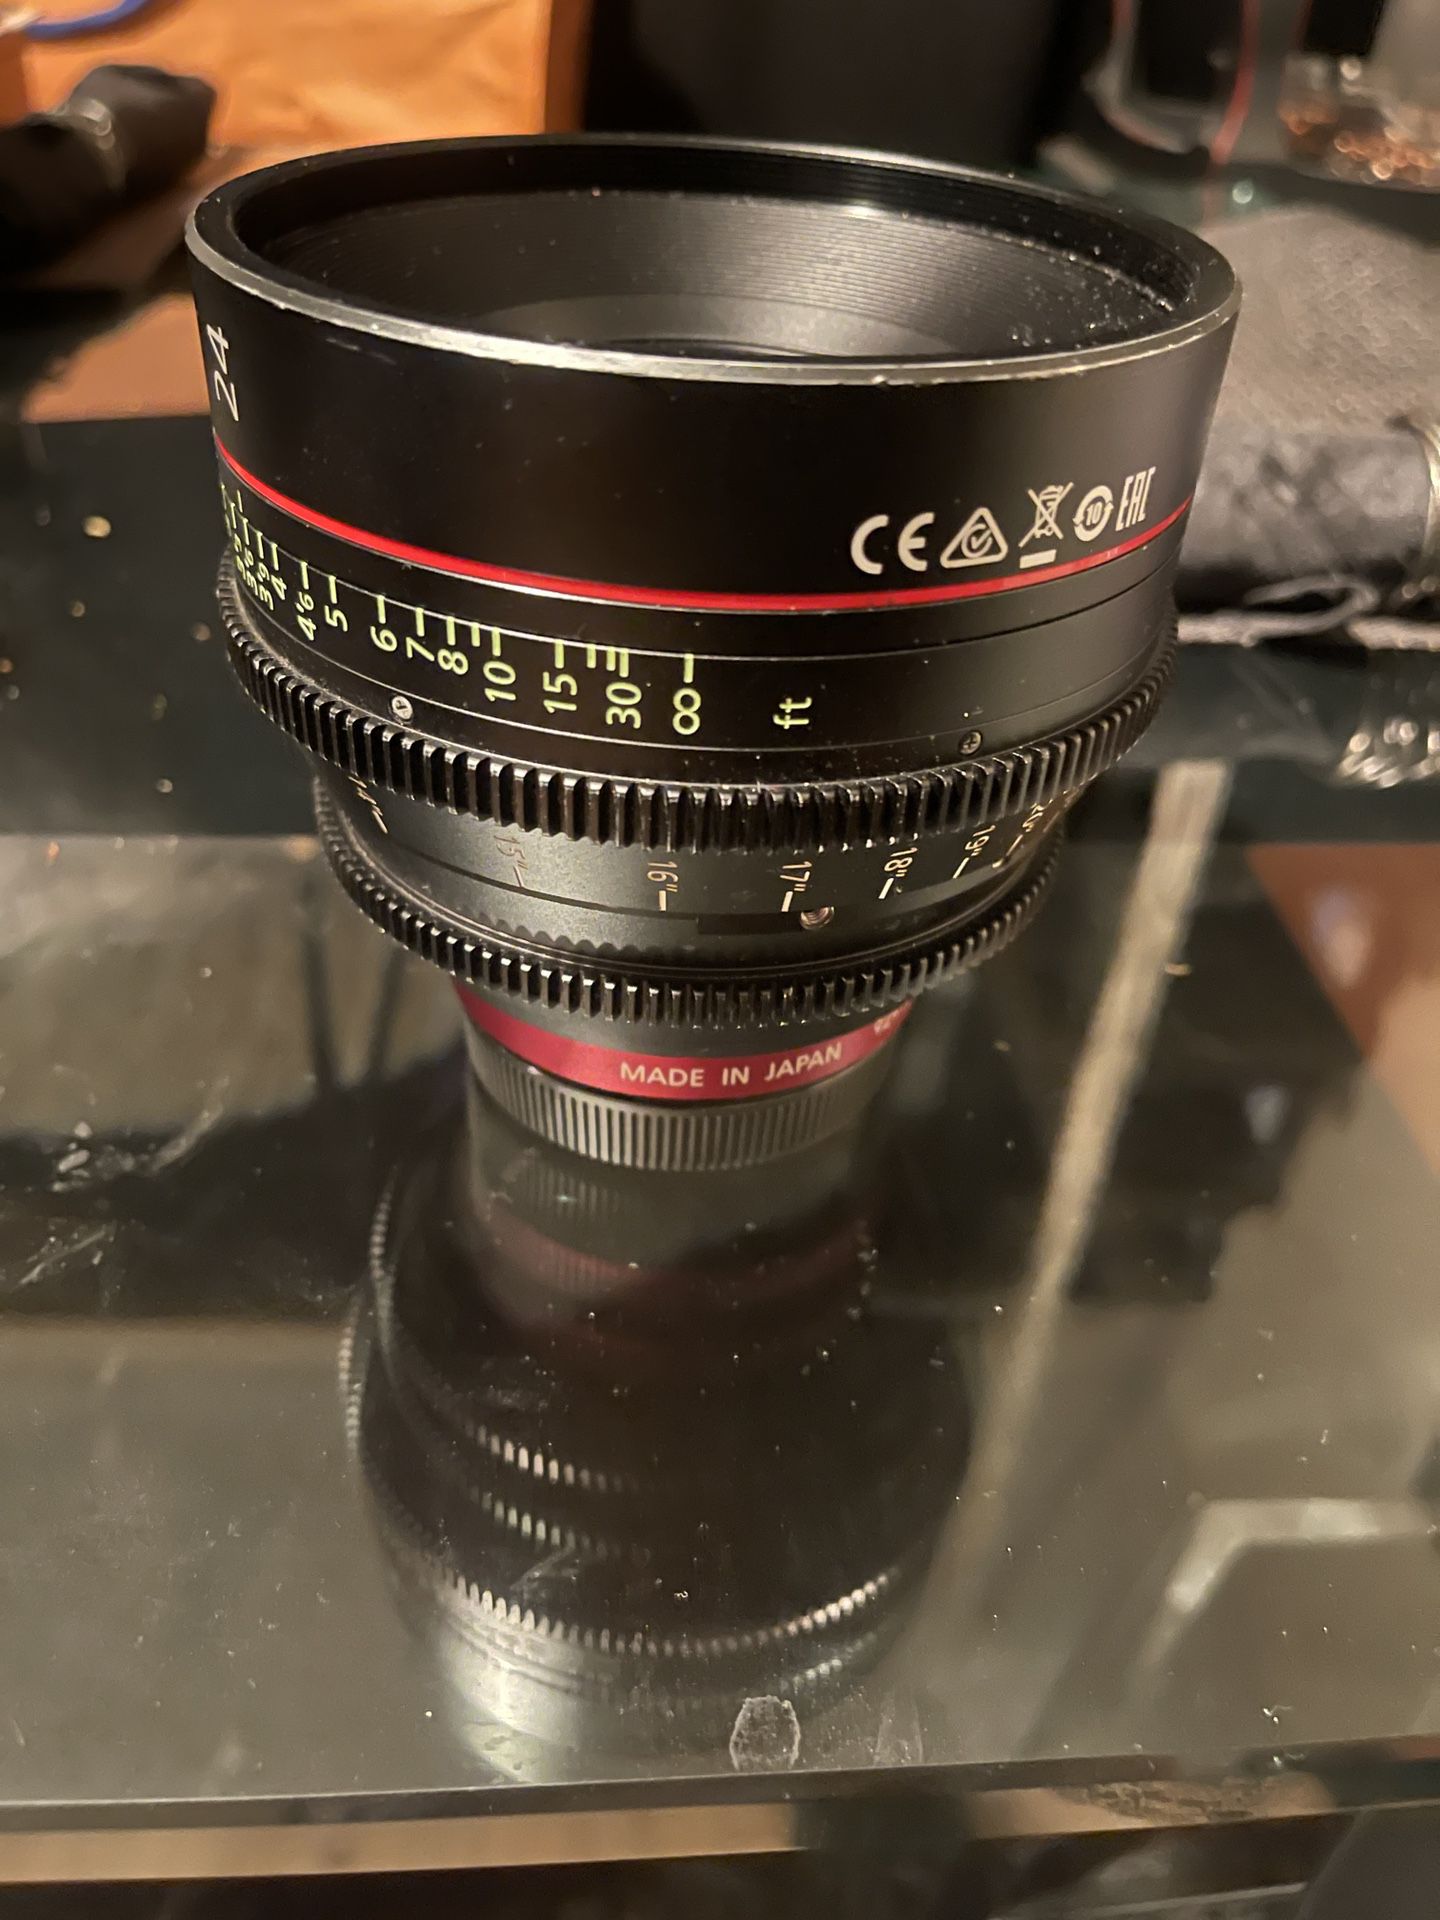 Canon 24mm Cine Lens